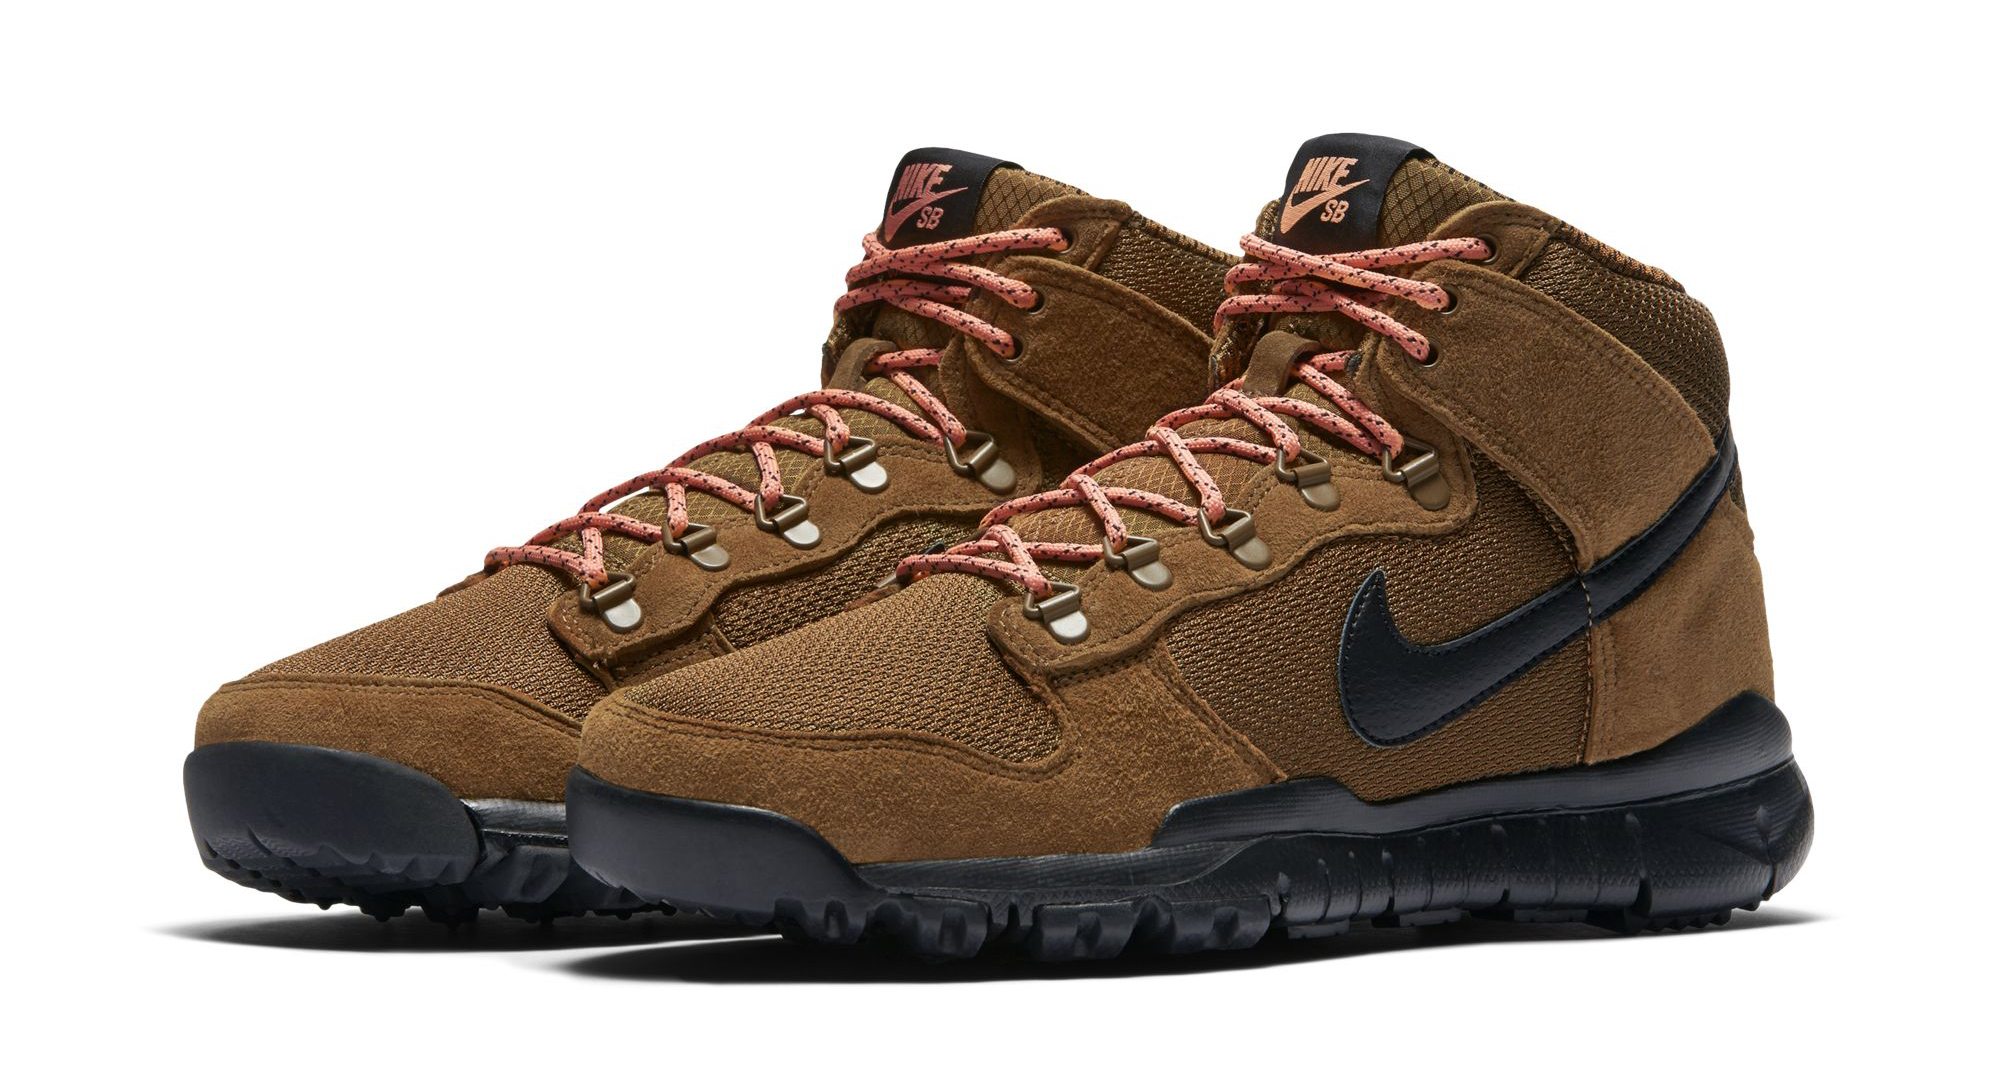 Nike SB Dunk High Boot "Military Brown"